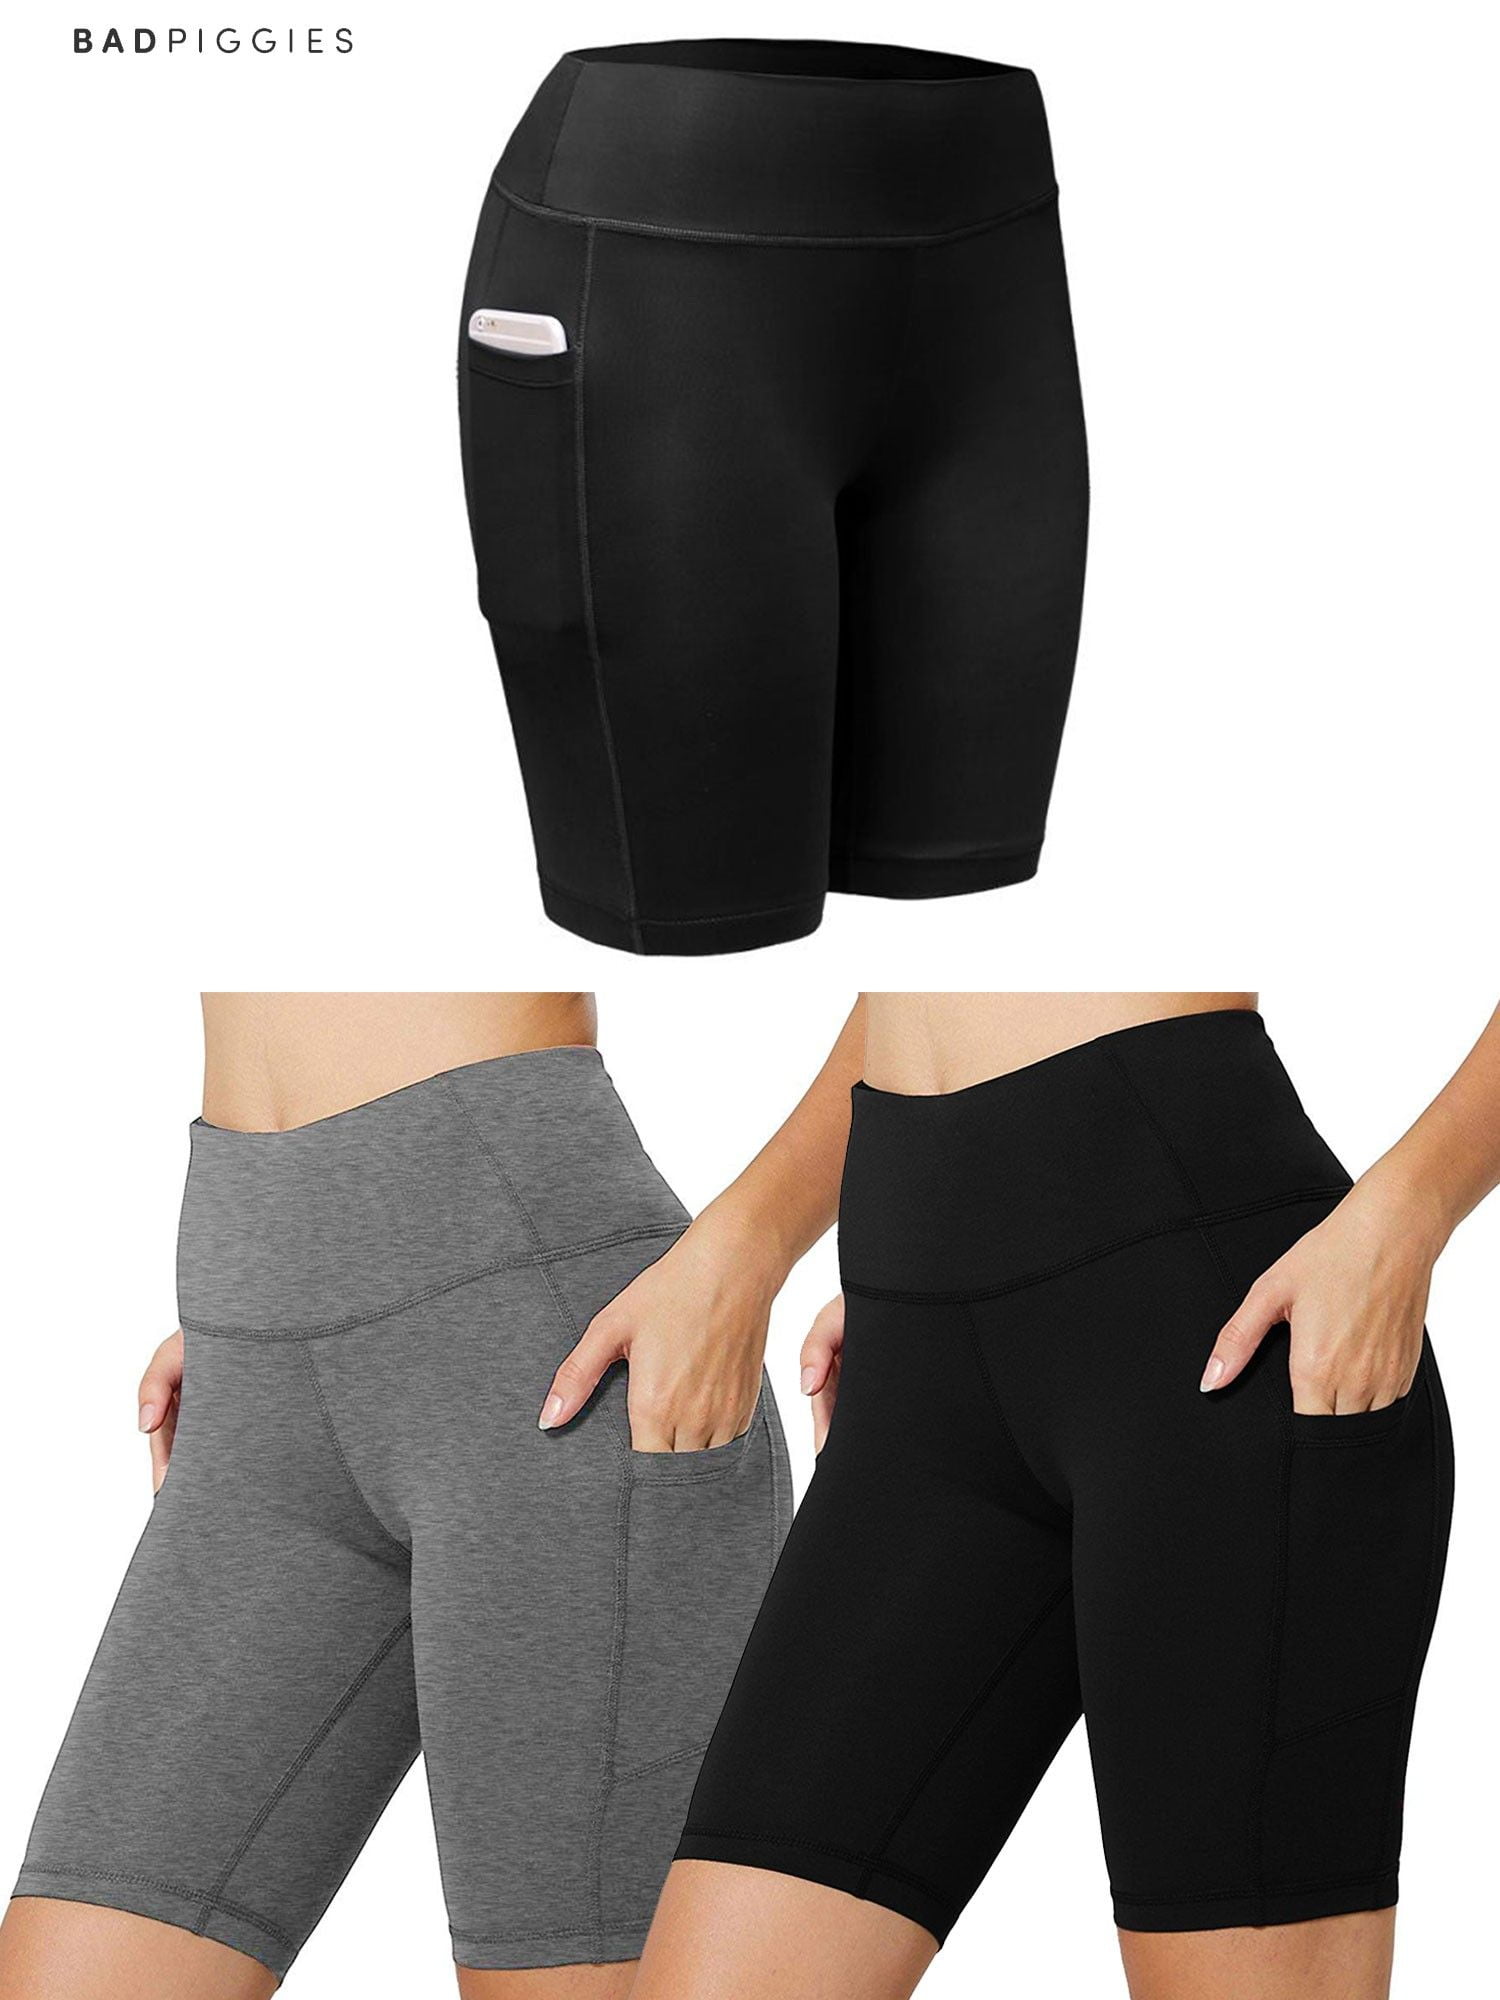 BadPiggies Women's High Waist Workout Yoga Shorts Running Compression Pants  With Side Pockets Tummy Control (L, Black) - Walmart.com